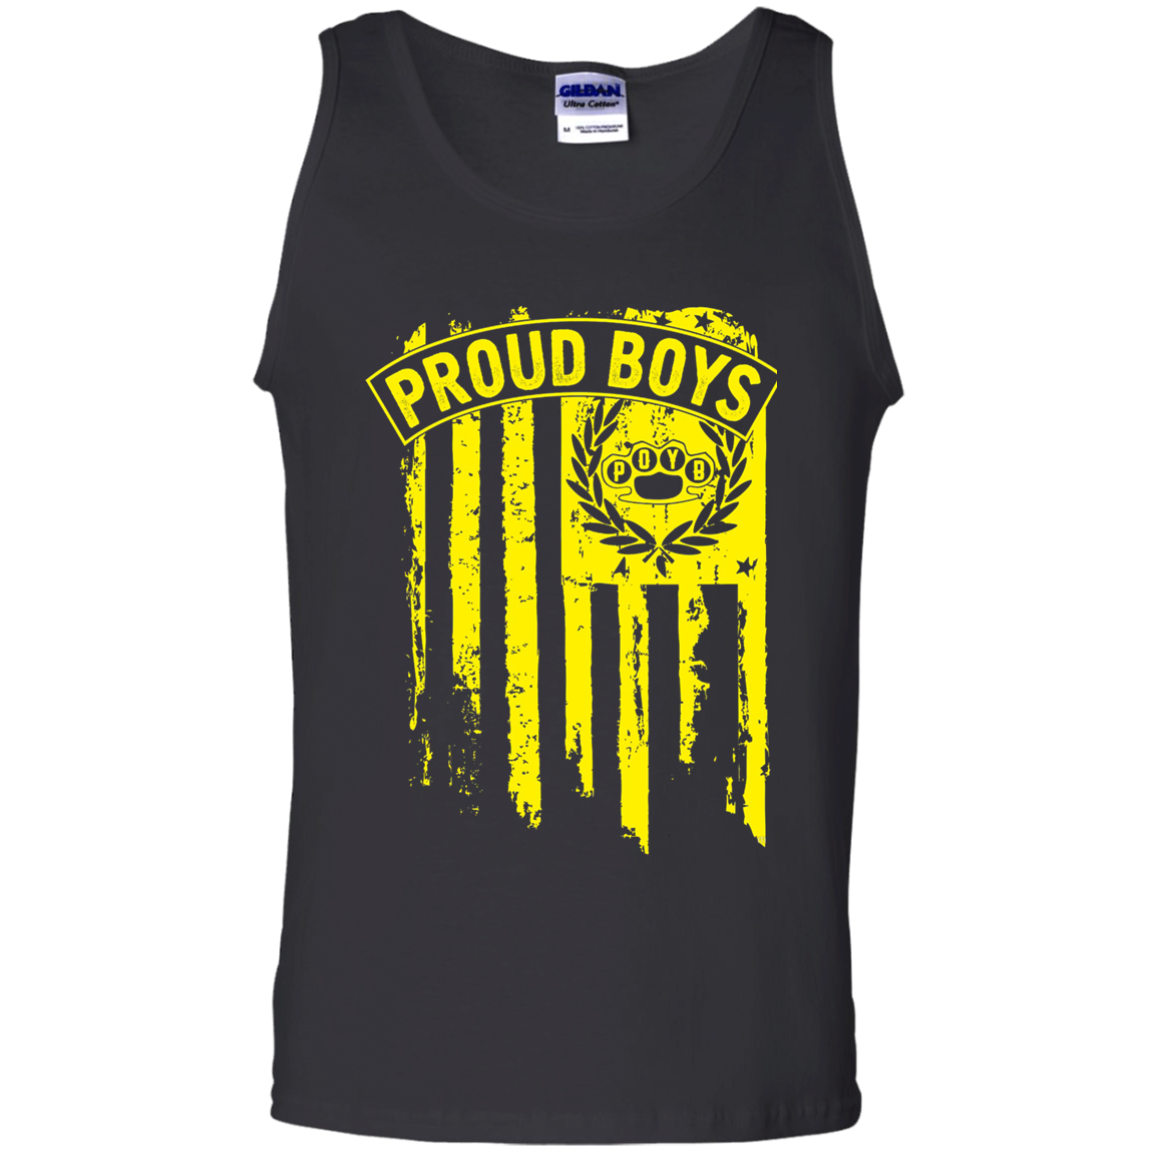 Proud Boys T-shirt